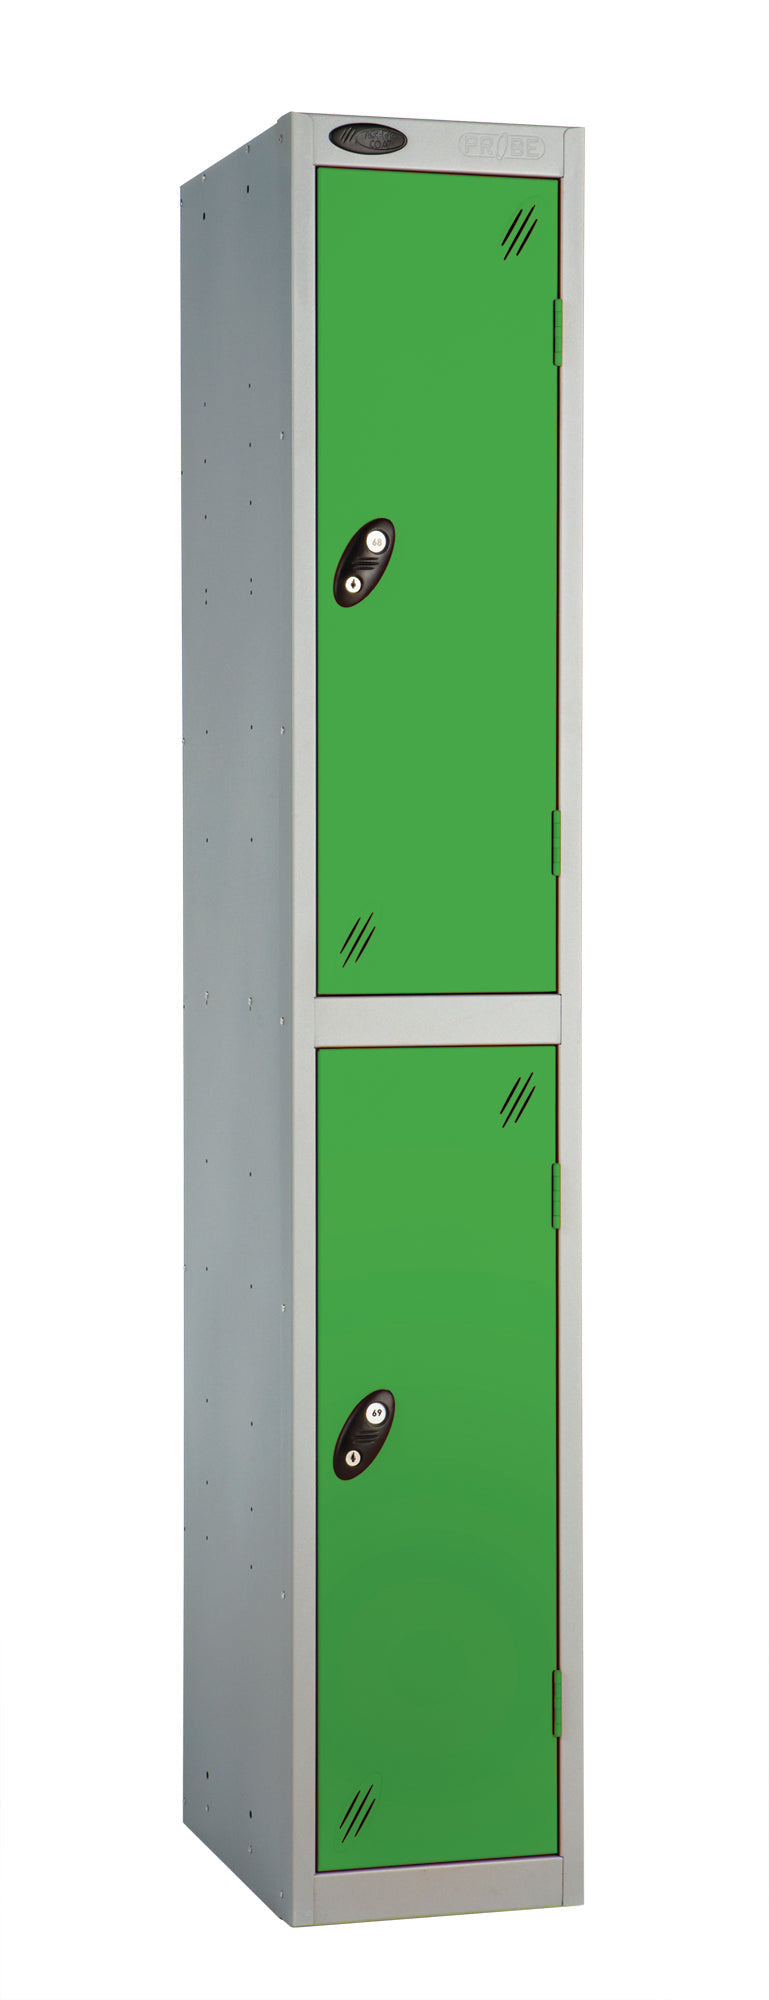 PROBEBOX STANDARD 1 NEST STEEL LOCKERS - FOREST GREEN 2 DOOR Storage Lockers > Lockers > Cabinets > Storage > Probe > One Stop For Safety   